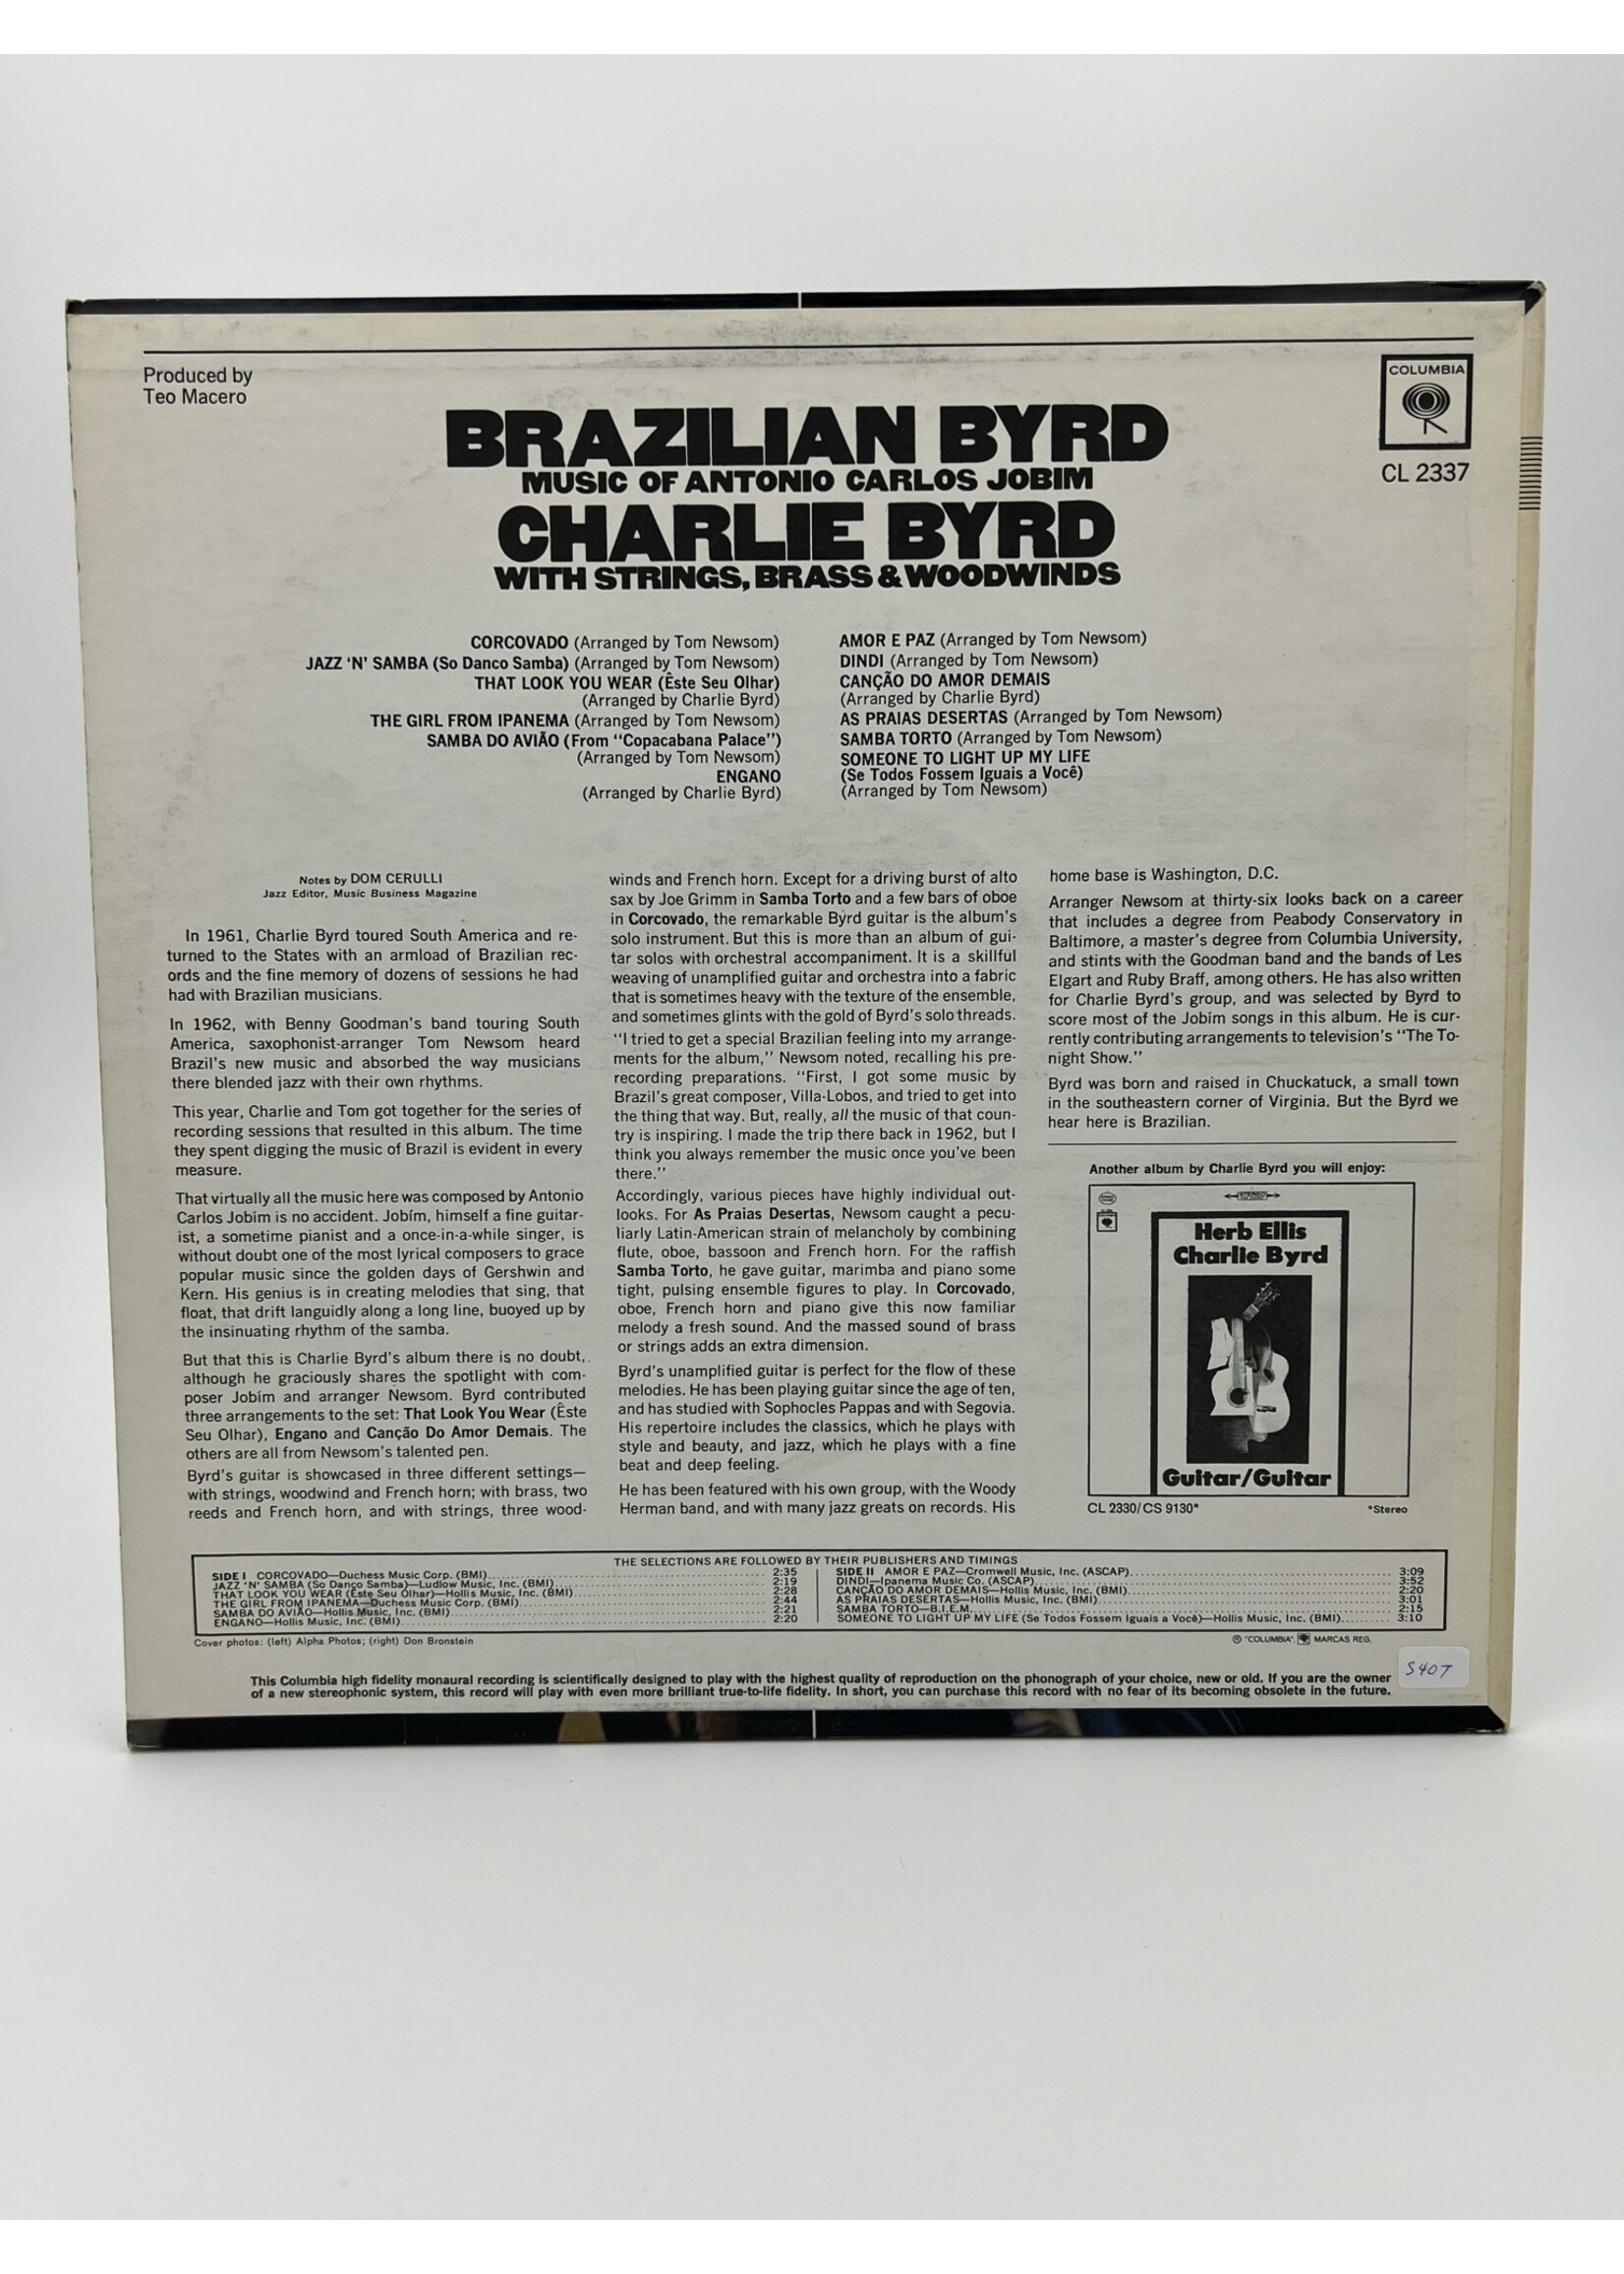 LP   Charlie Byrd Brazilian Byrd LP Record